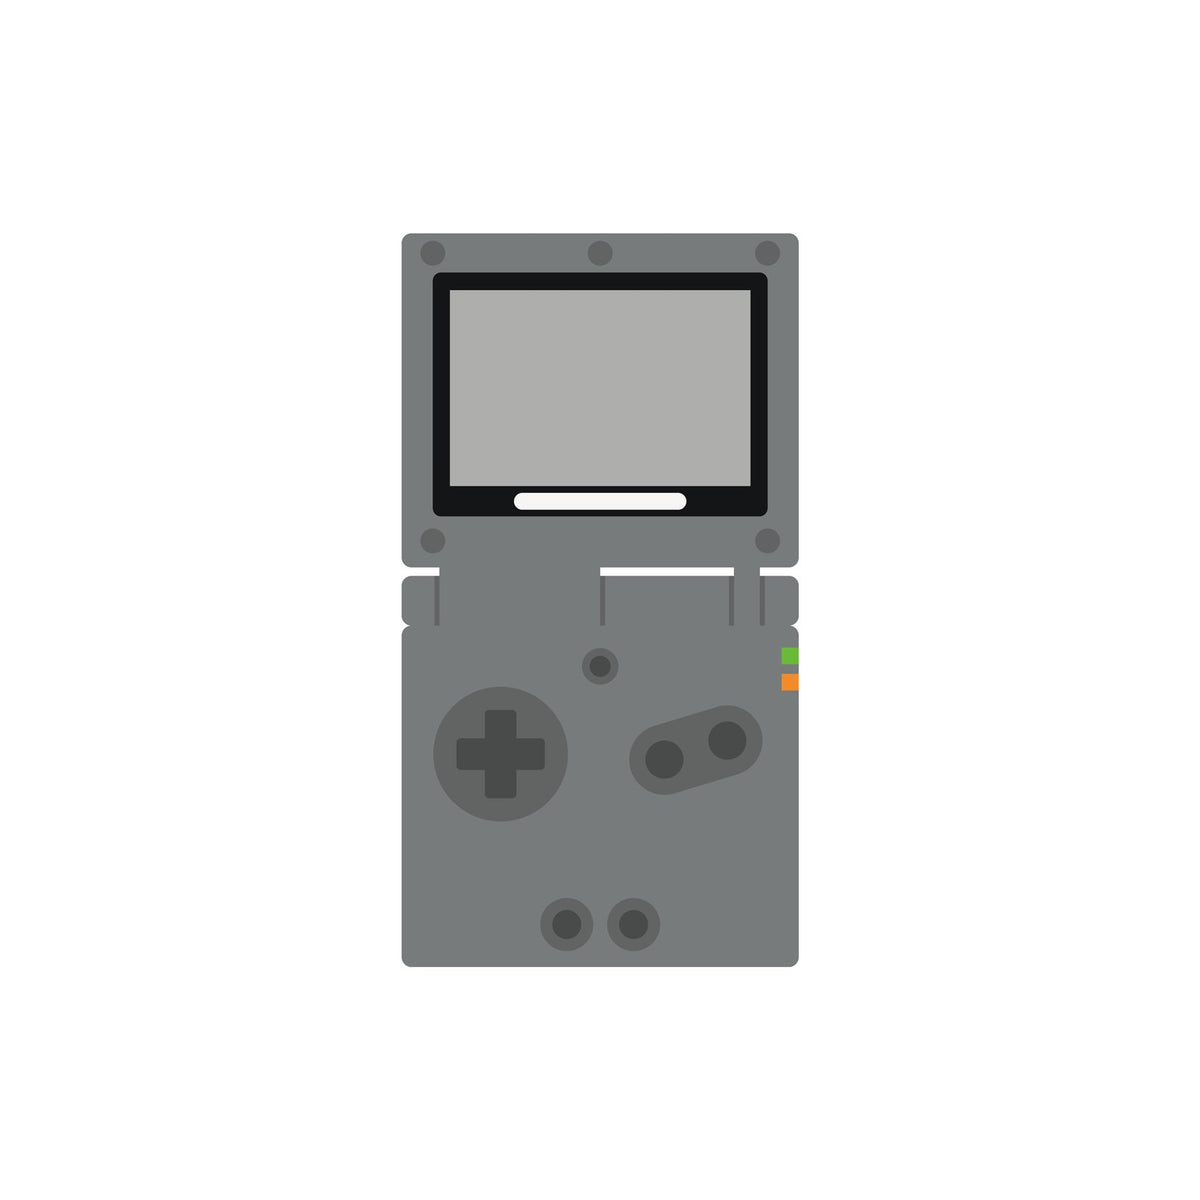 Nintendo Game Boy Advance SP wallpaper - NES special editi…